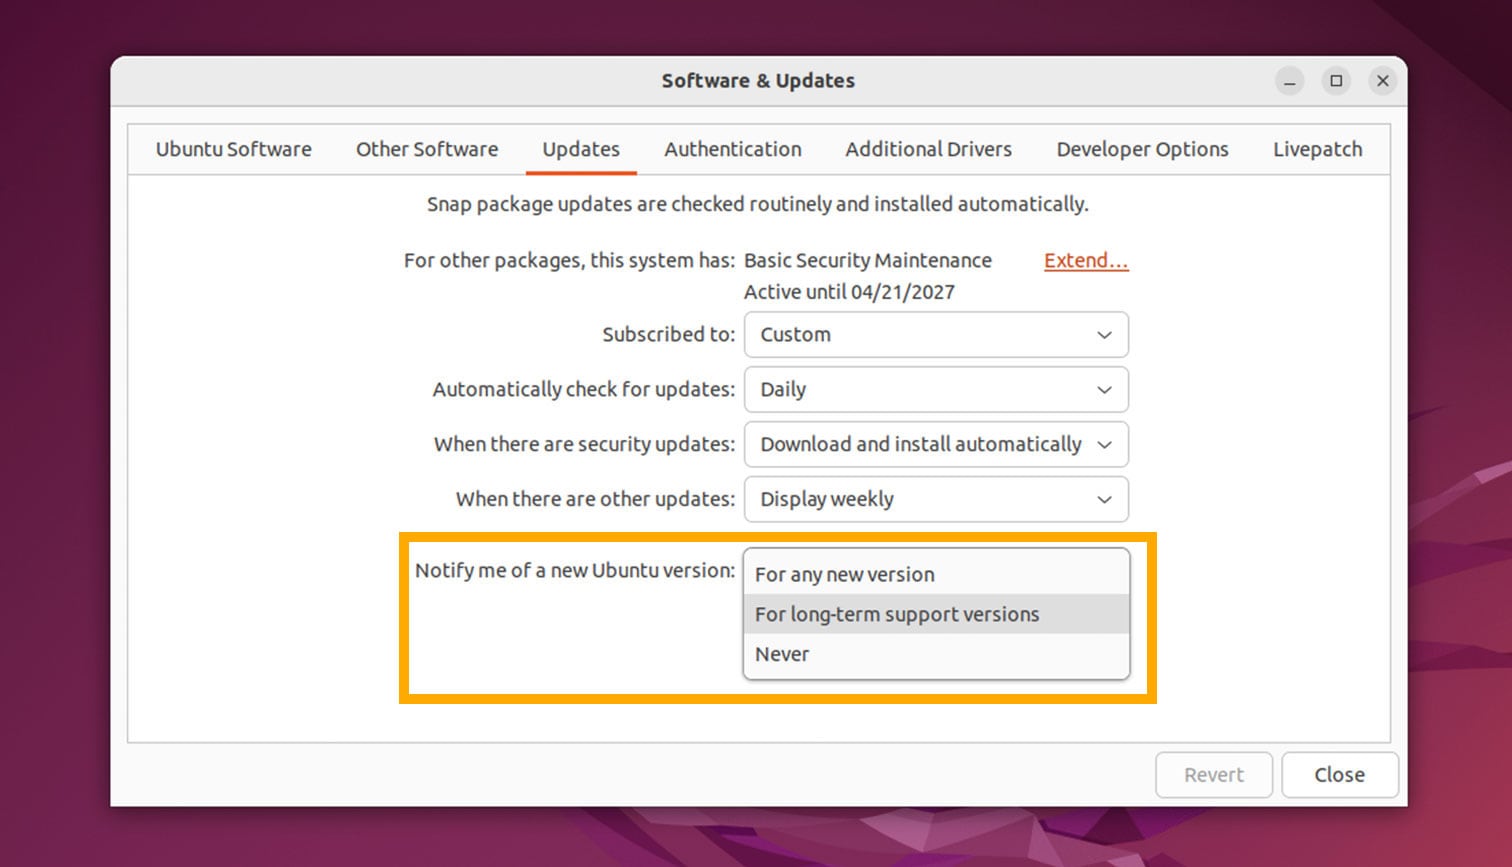 A screenshot of software and updates in Ubuntu 22.04 LTS